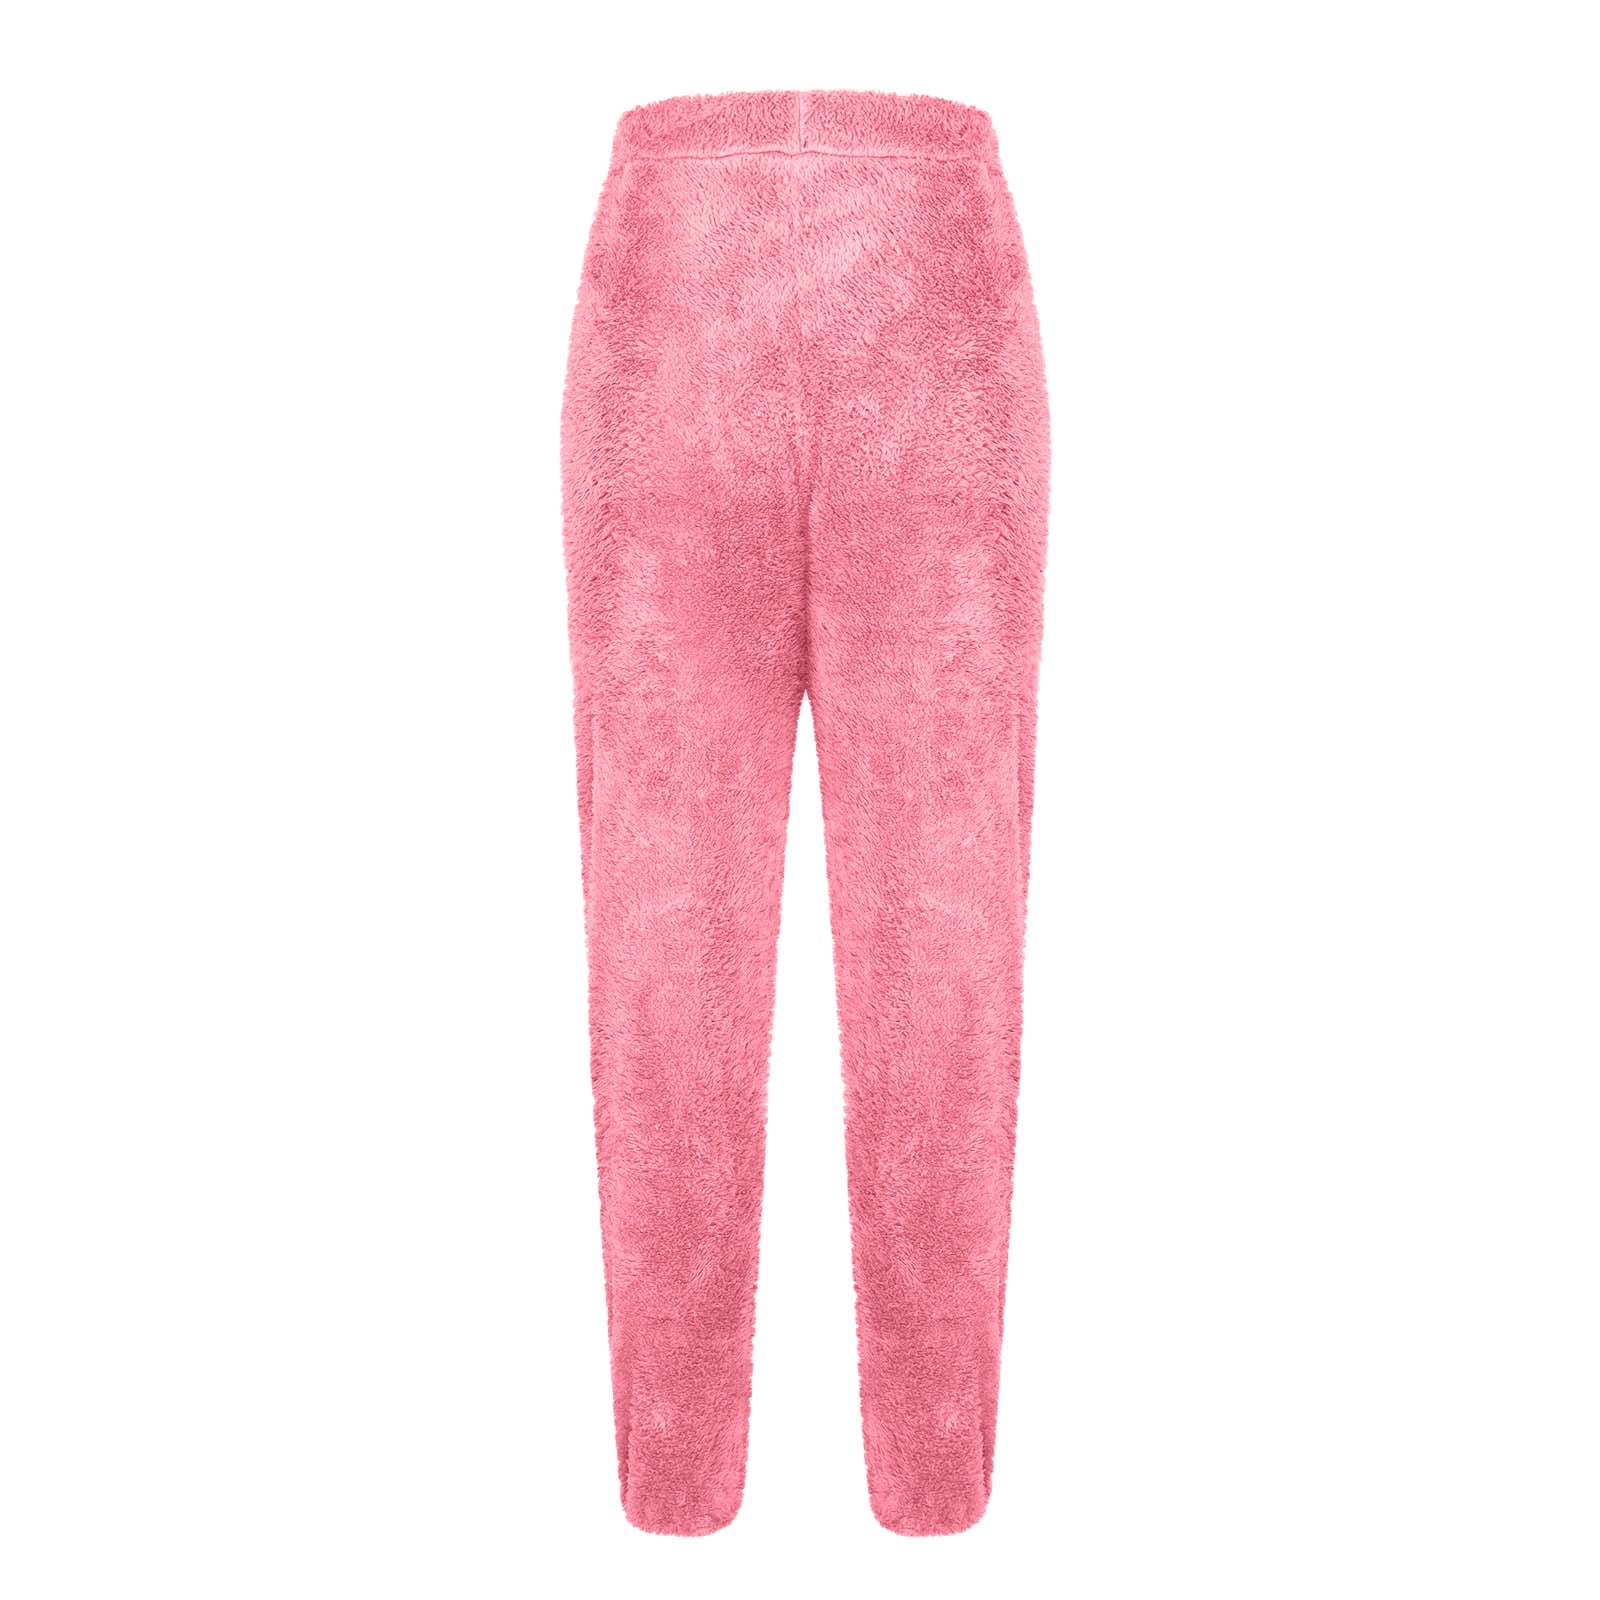 fuzzy, soft holister pink flare sweats